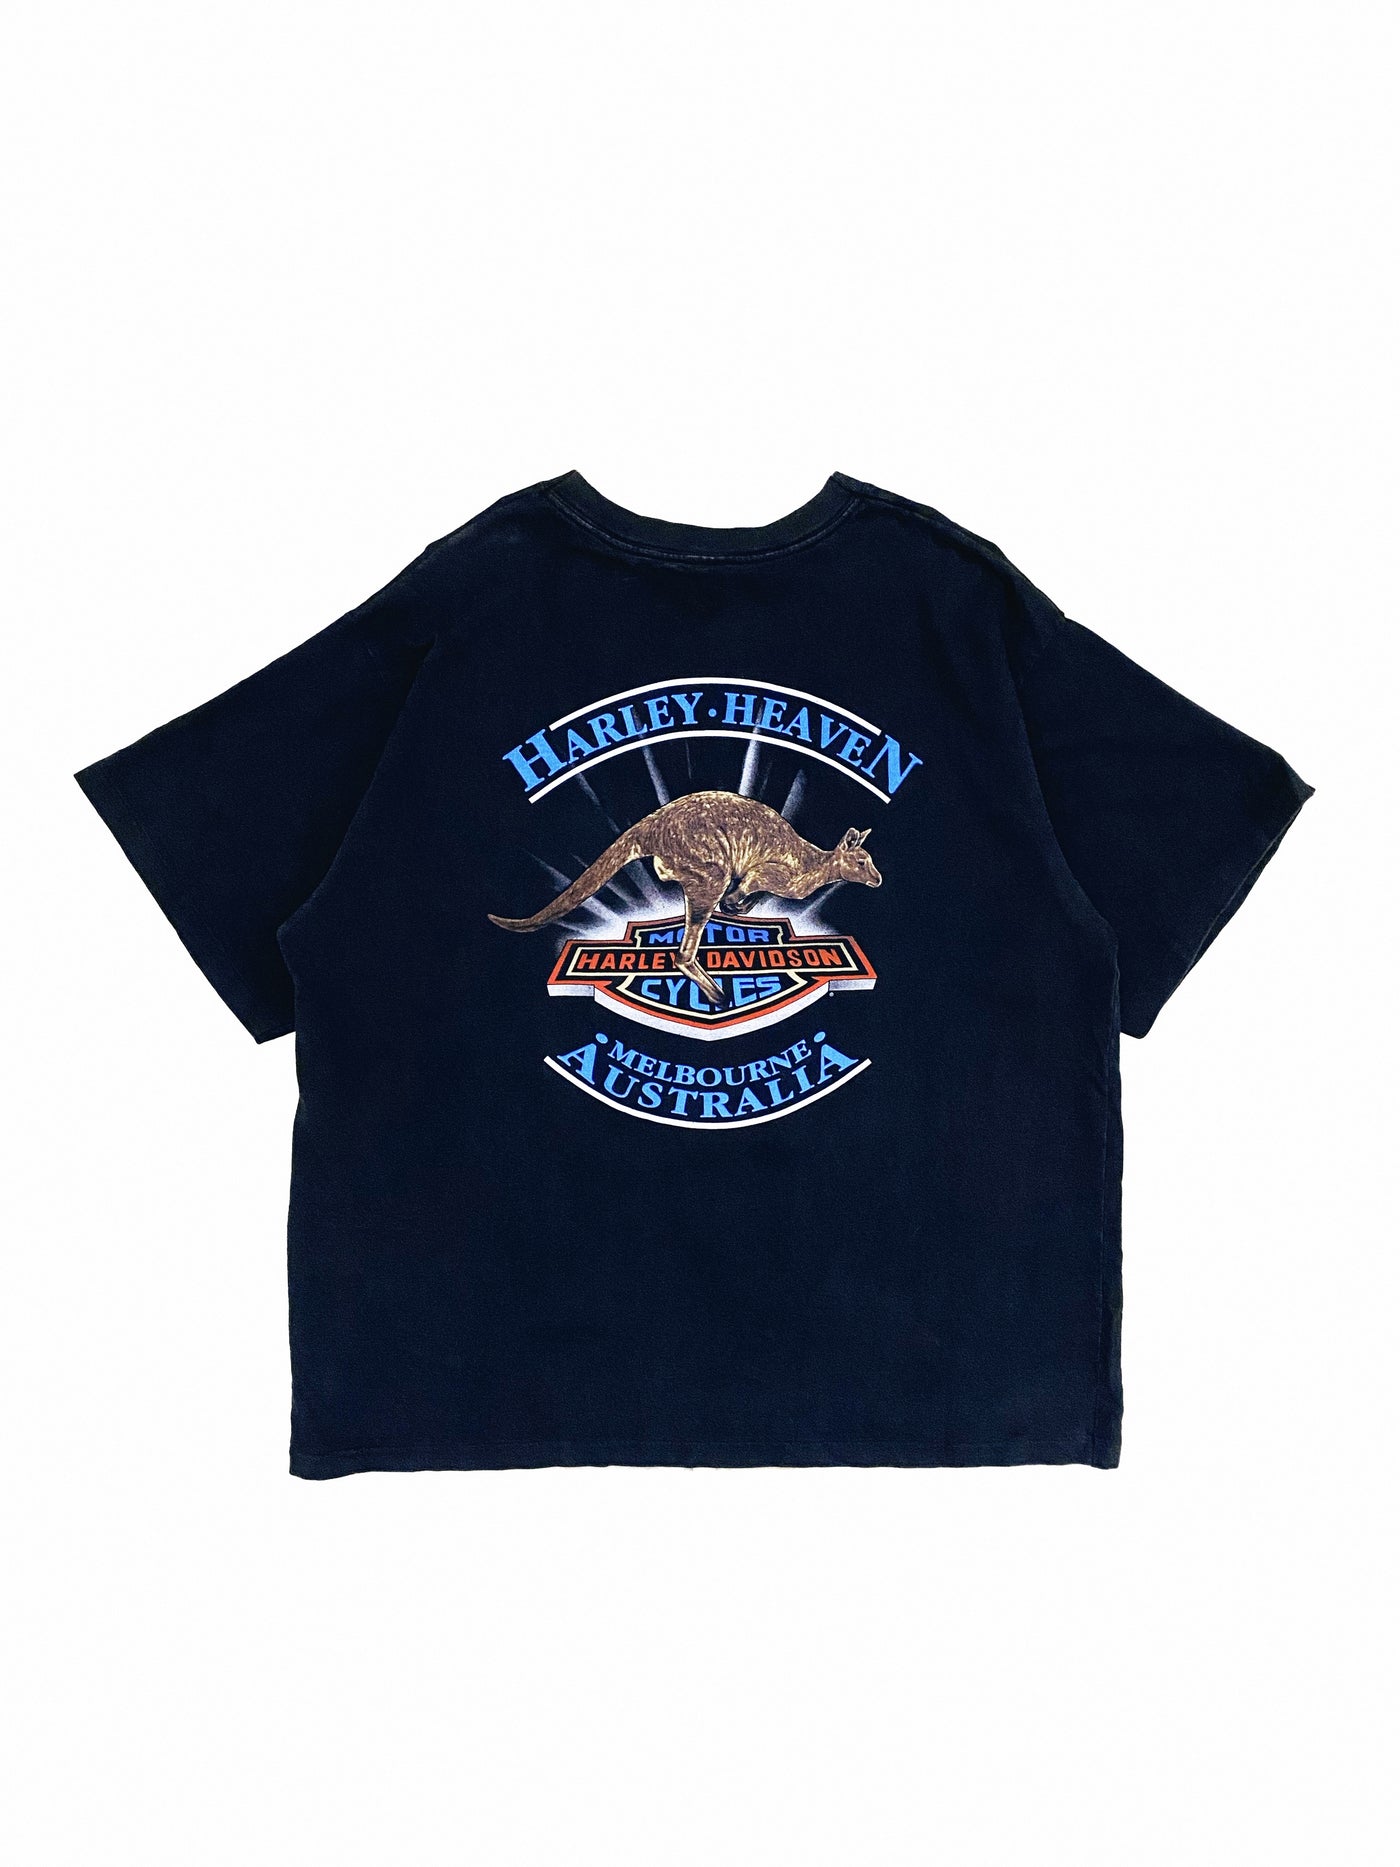 Vintage 1997 Roo Country Harley Davidson T-Shirt